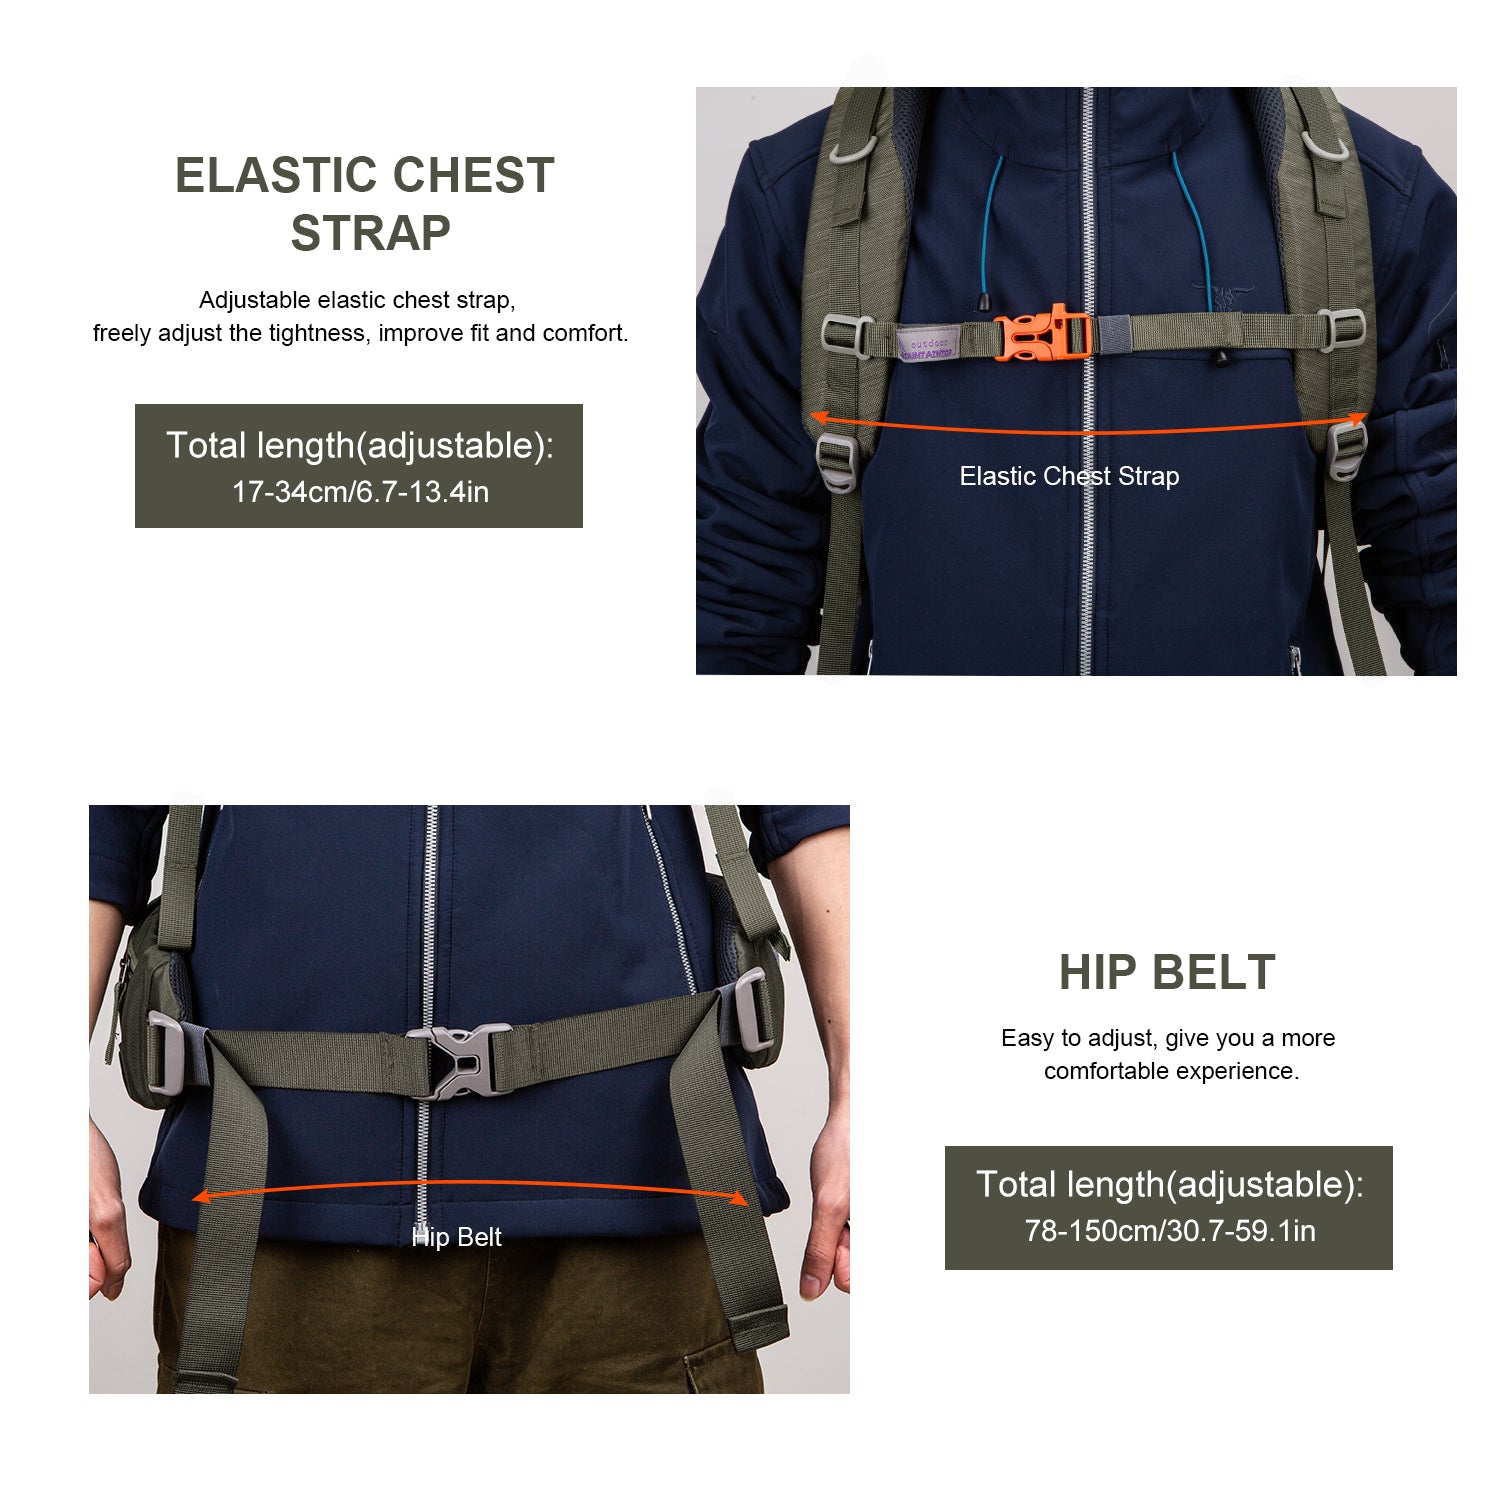 Elastic chest strap,Hip belt